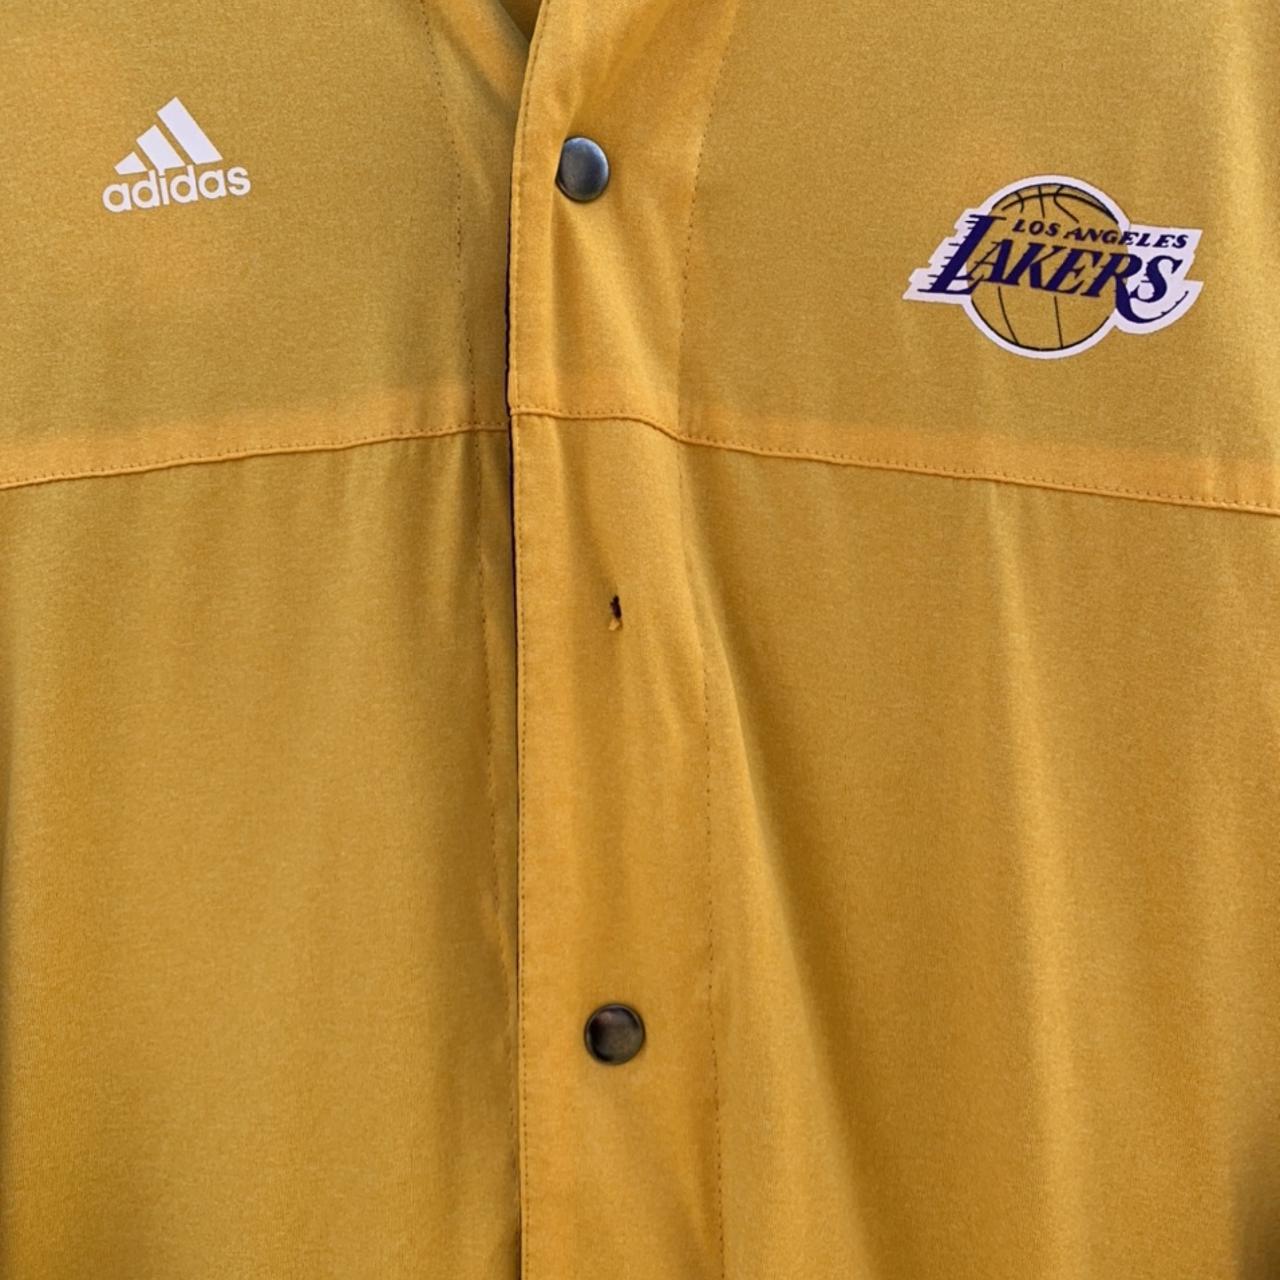 Adidas Los Angeles Lakers NBA Basketball Warm Up - Depop